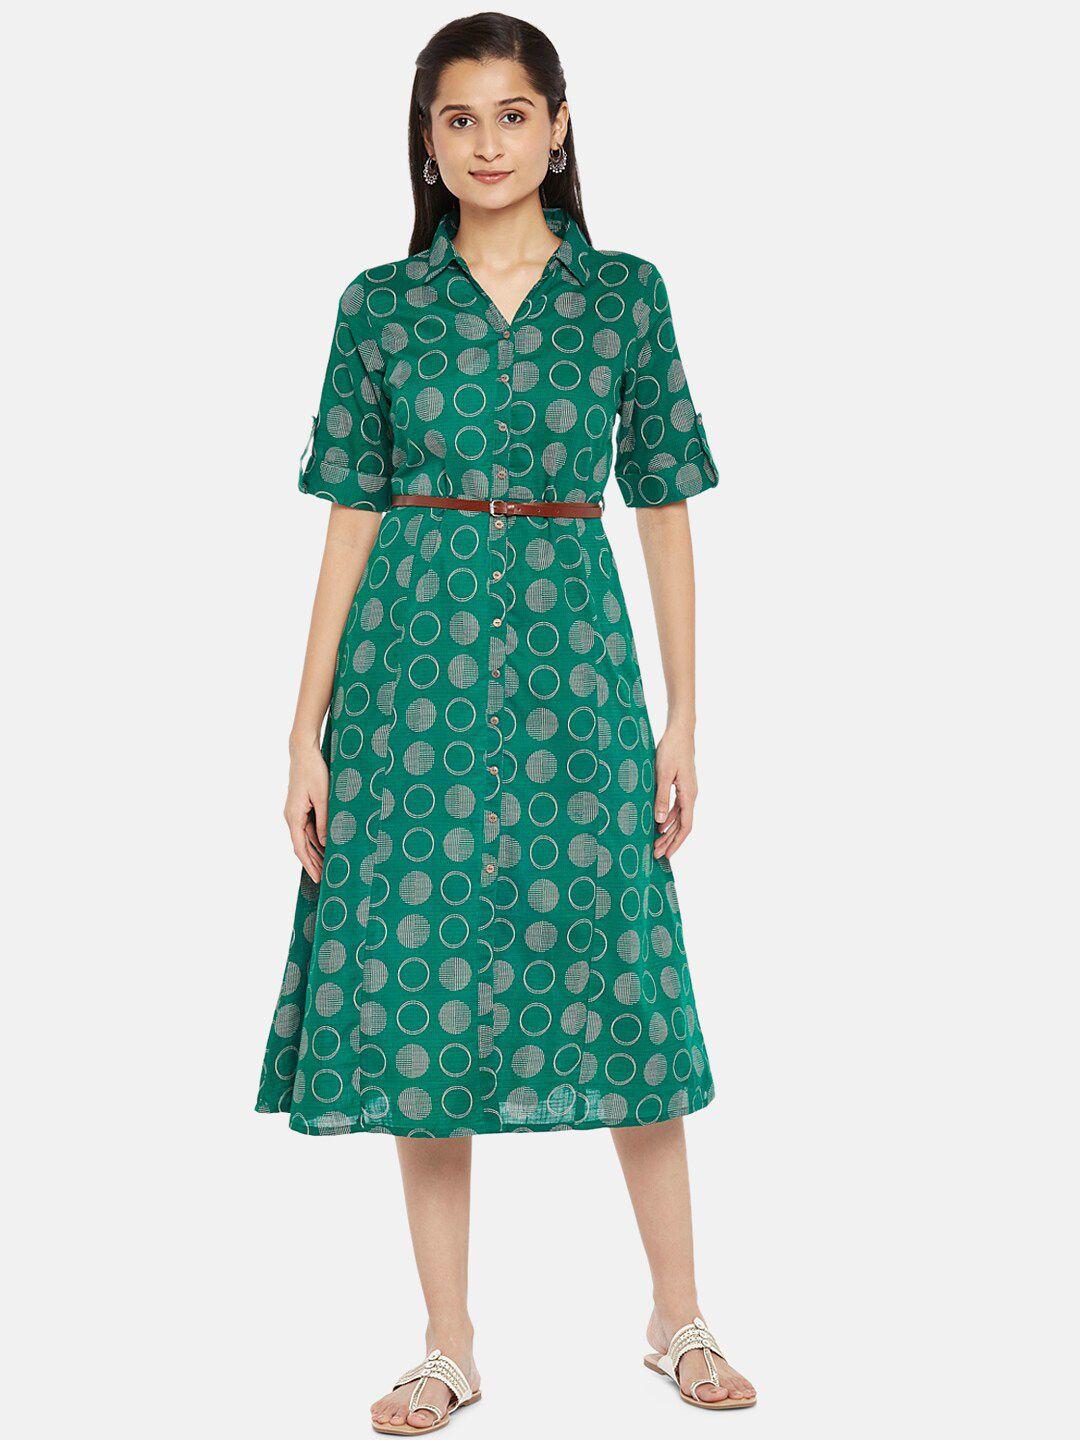 akkriti by pantaloons green & white geometric printed a-line pure cotton midi dress